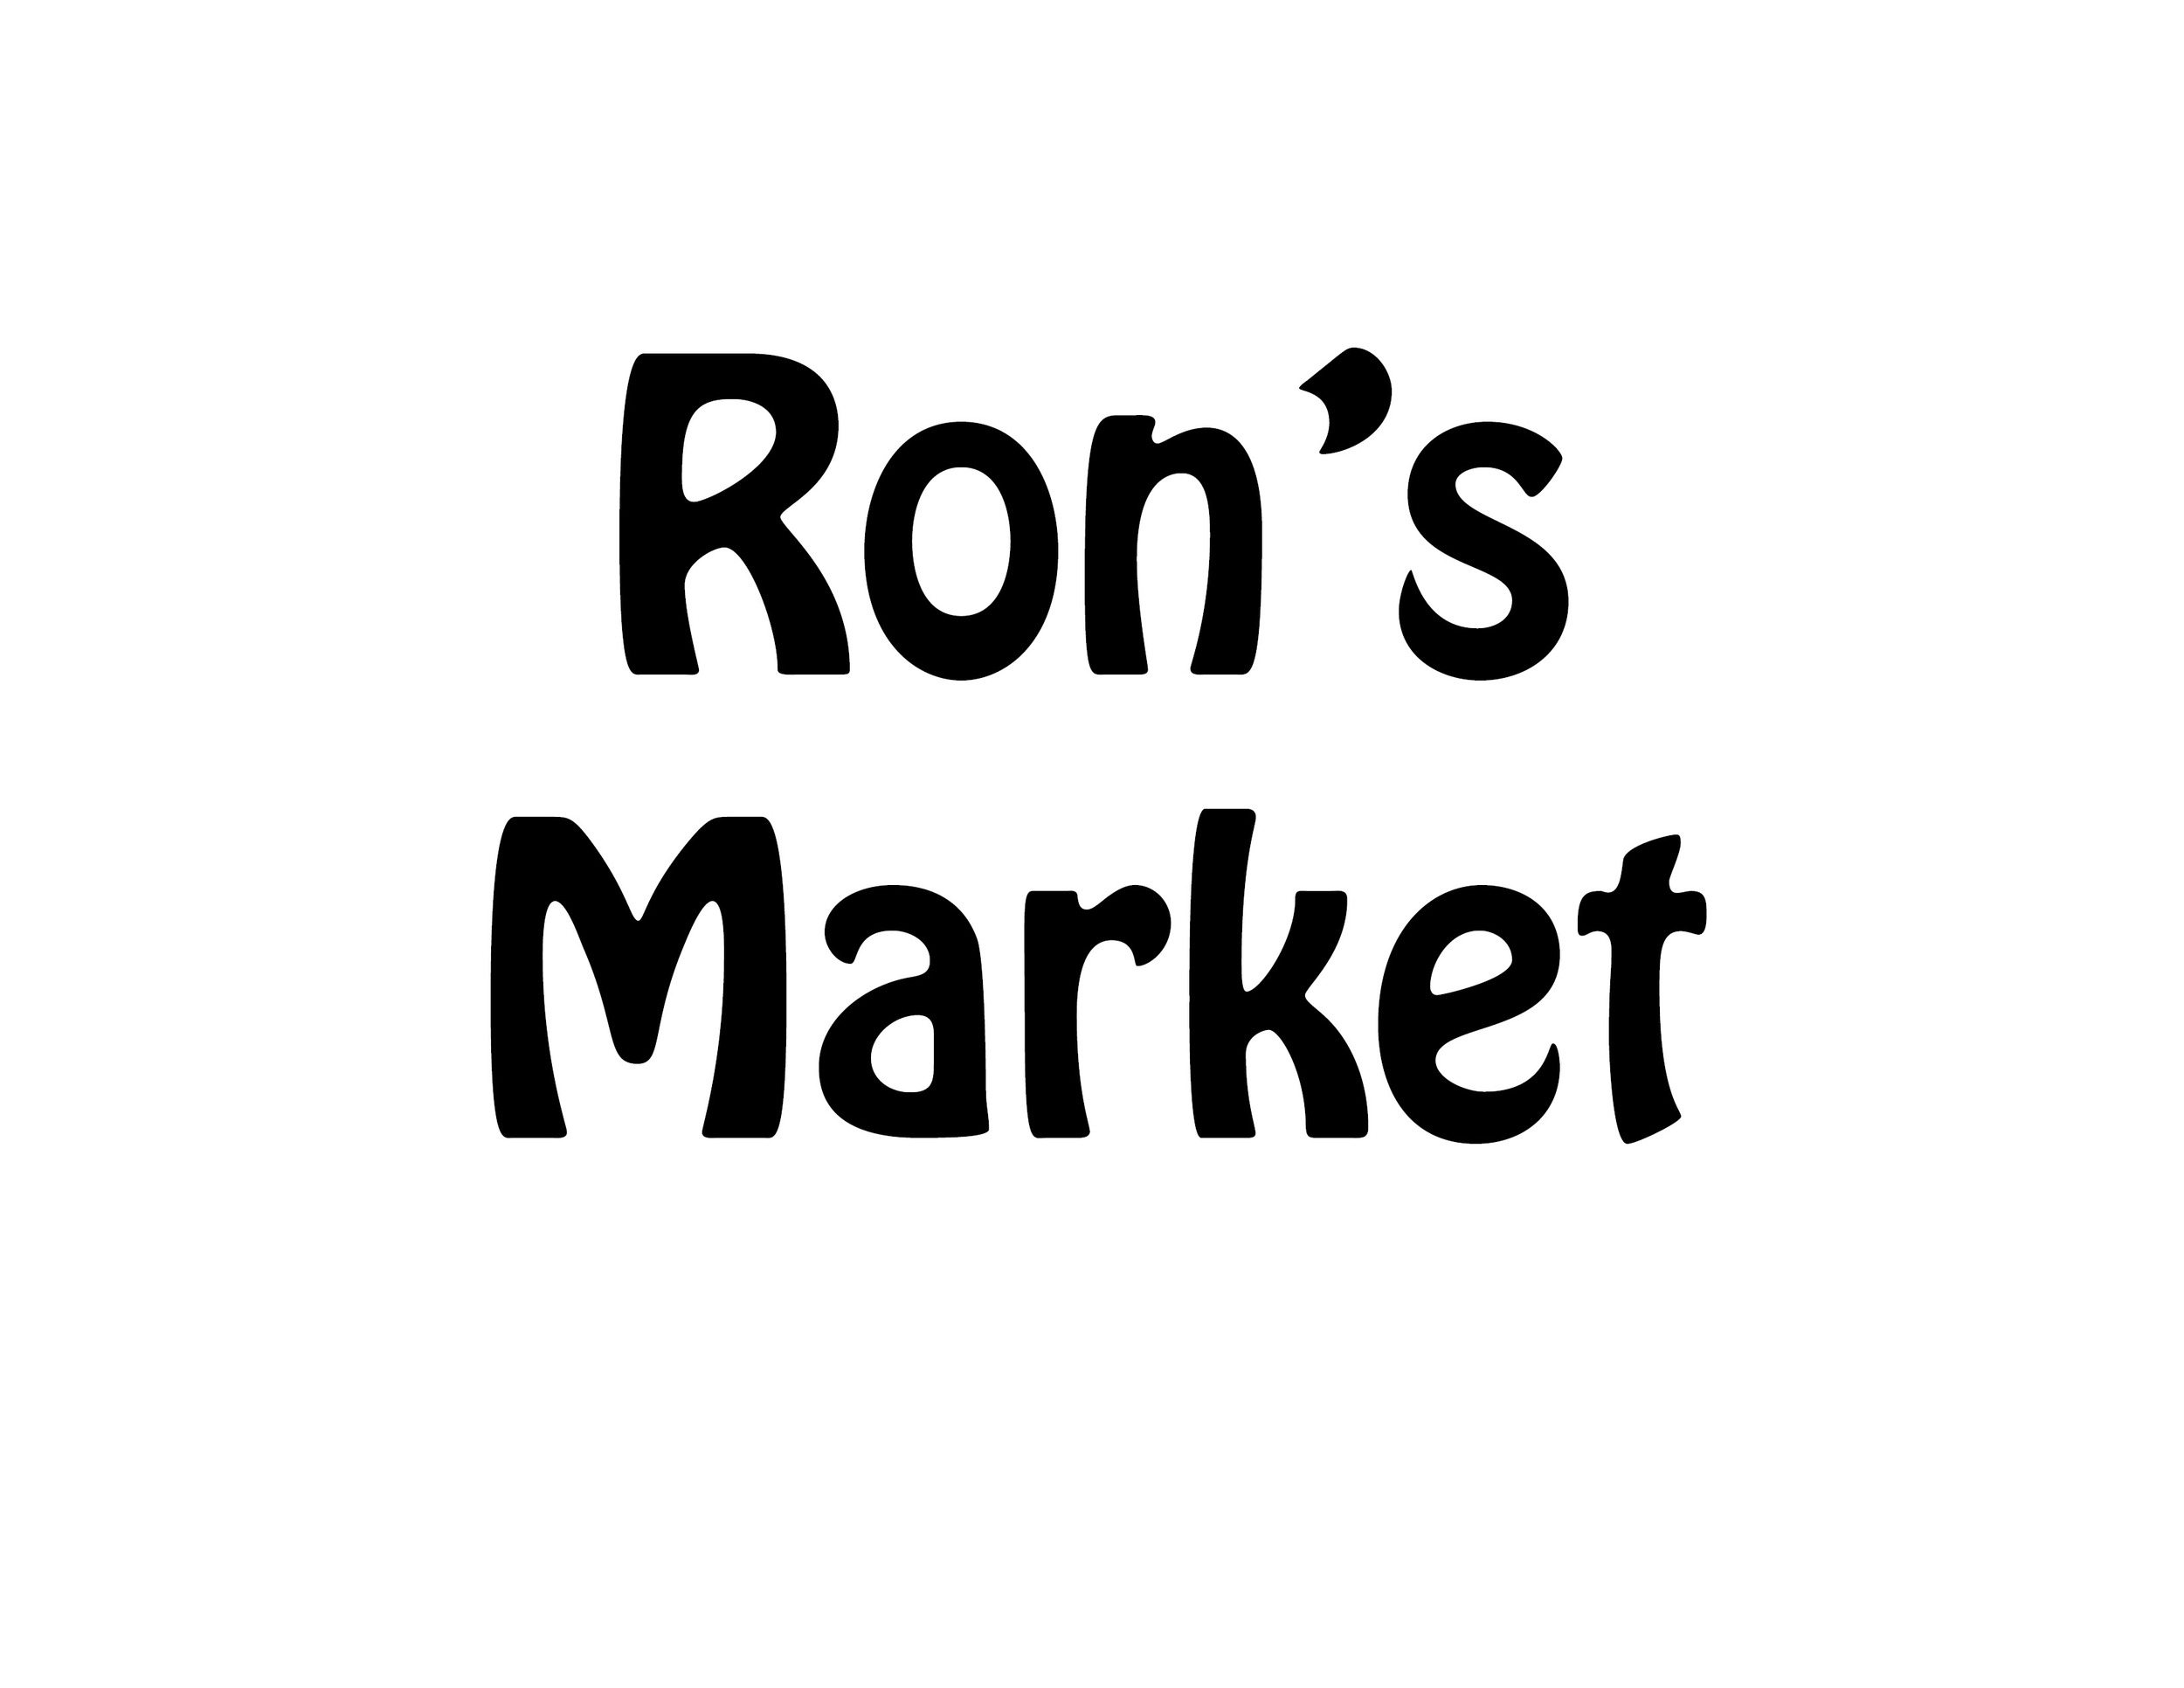 rons market.jpg